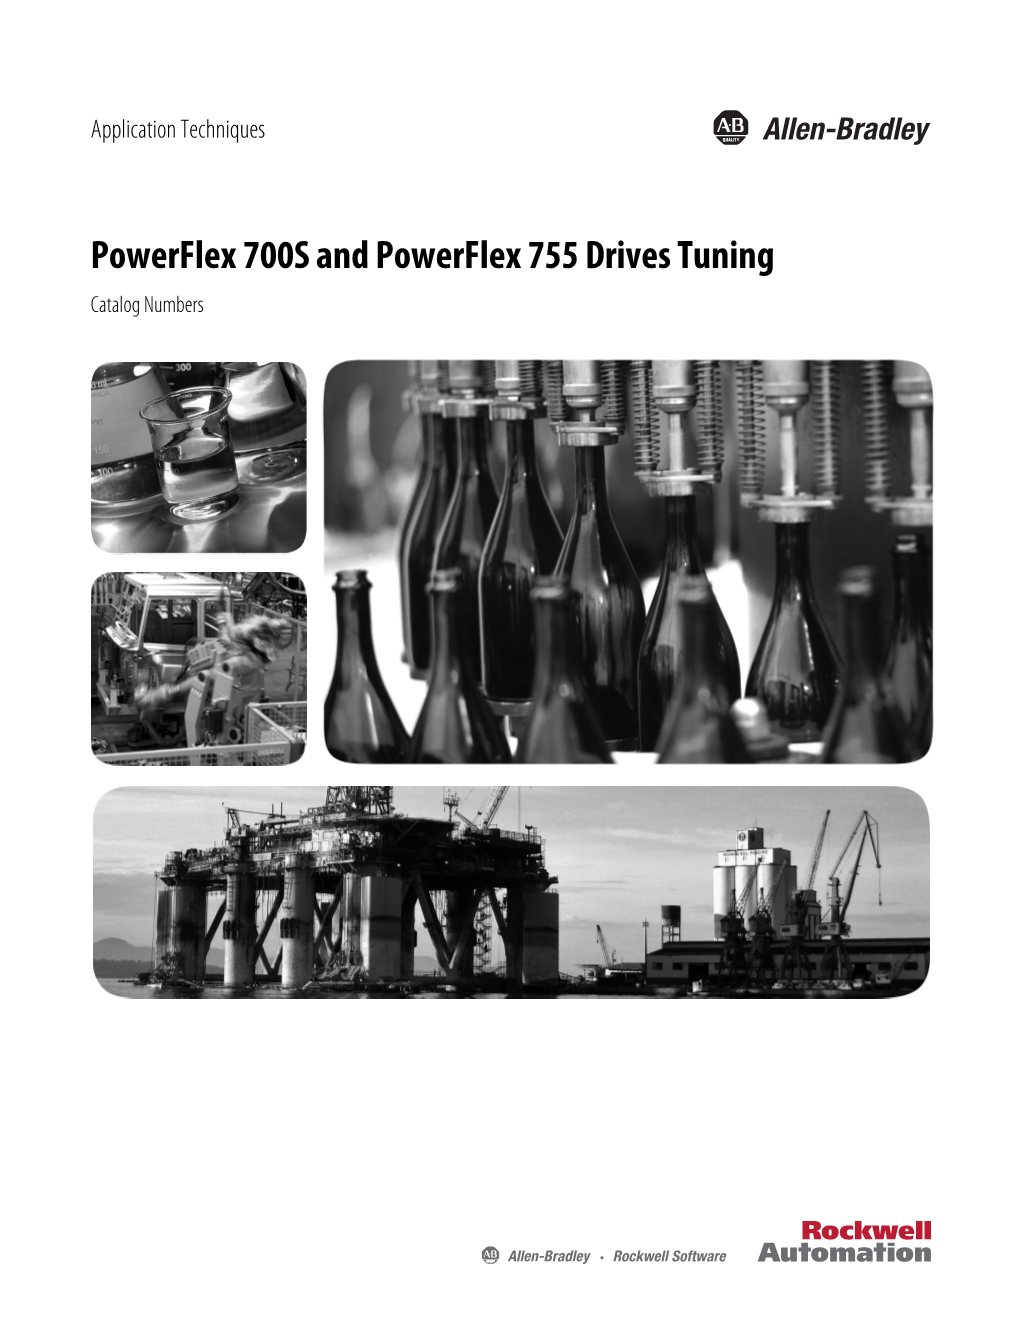 Powerflex 700S and Powerflex 755 Drives Tuning Application Techniques